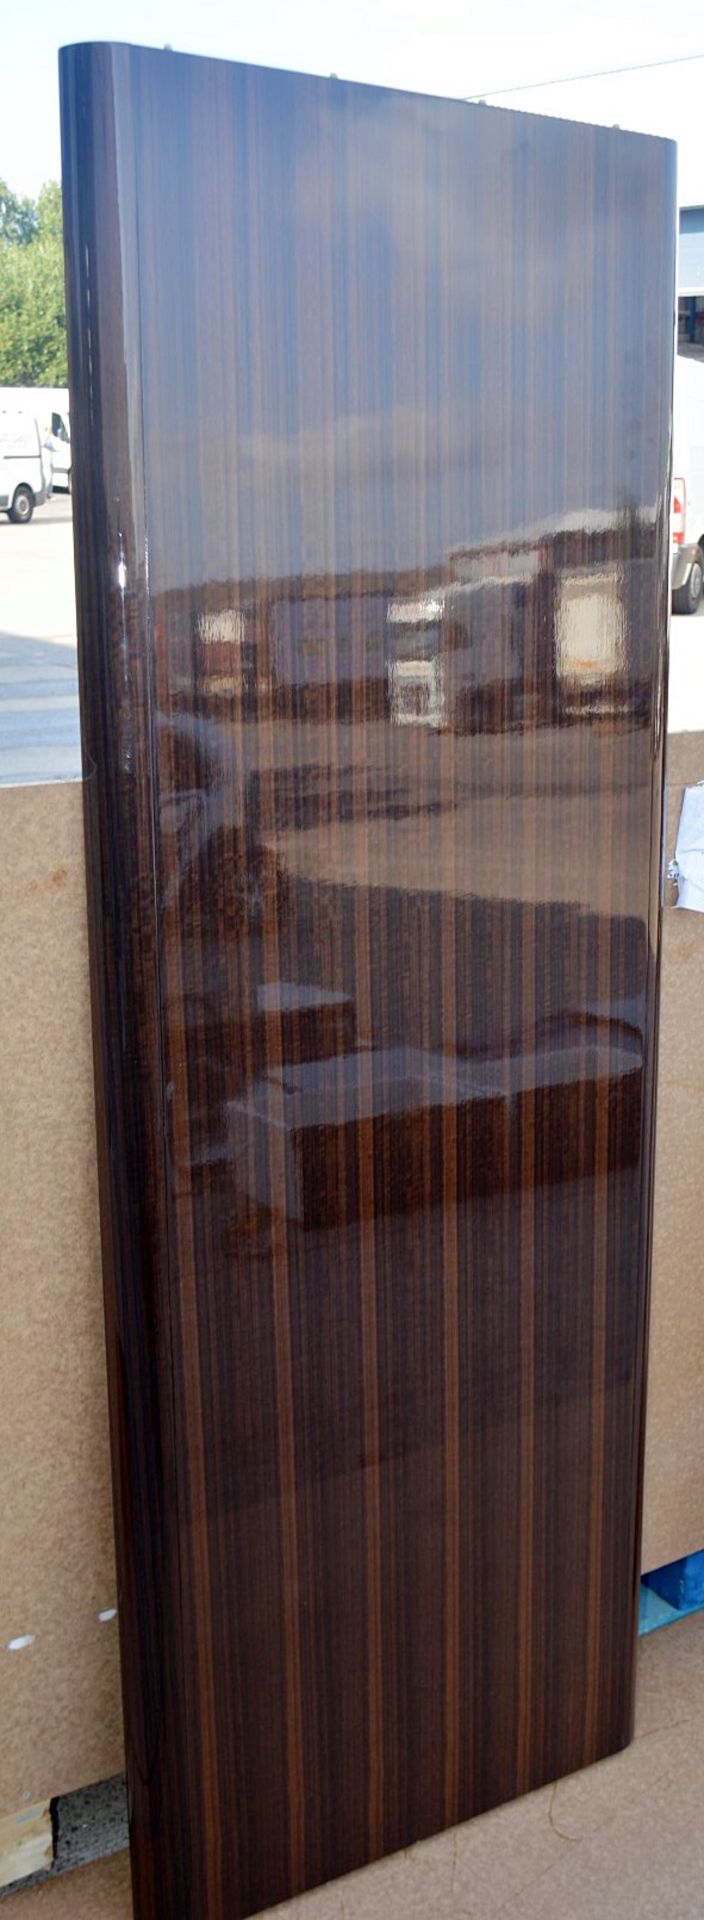 1 x FRATO Bespoke 'Siena' Wardrobe With A High Gloss Brown Wood Veneer Finish - Original RRP £18,890 - Image 4 of 21